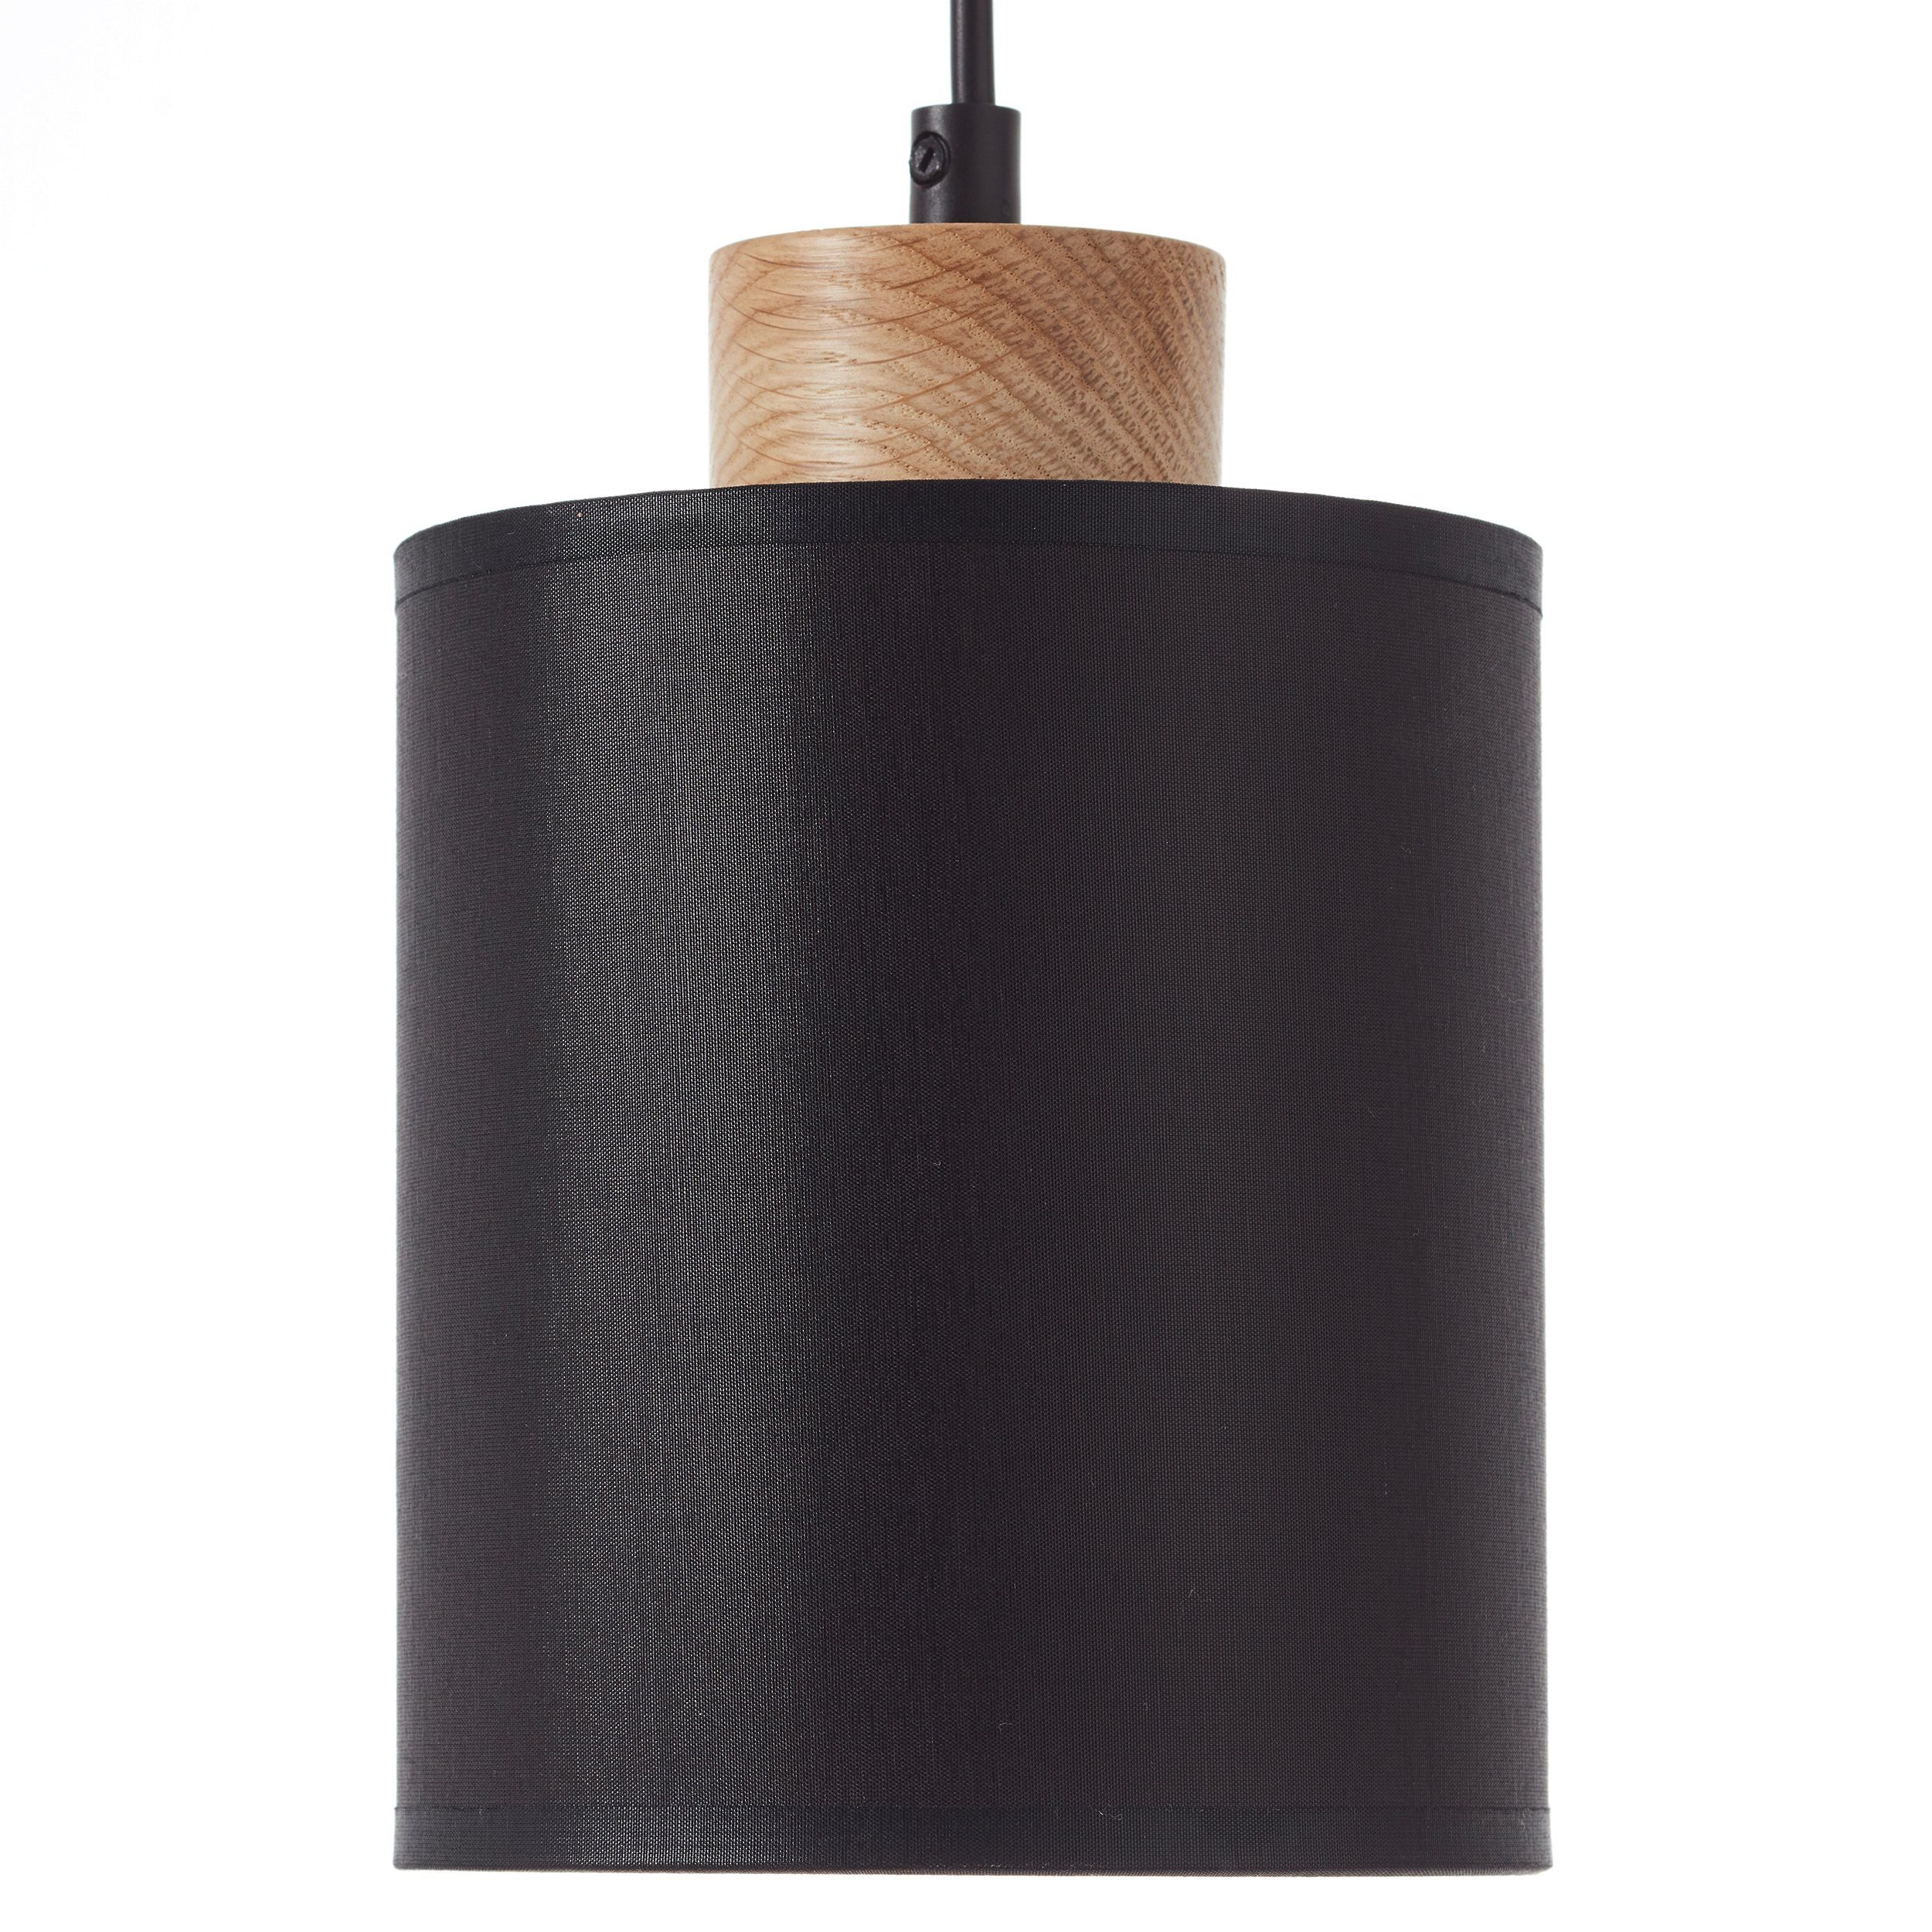 Lightbox Pendelleuchte, ohne Leuchtmittel, Hängelampe, cm, x 80 25 W, E27, max. kürzbar, Metall/Holz/Textil 111